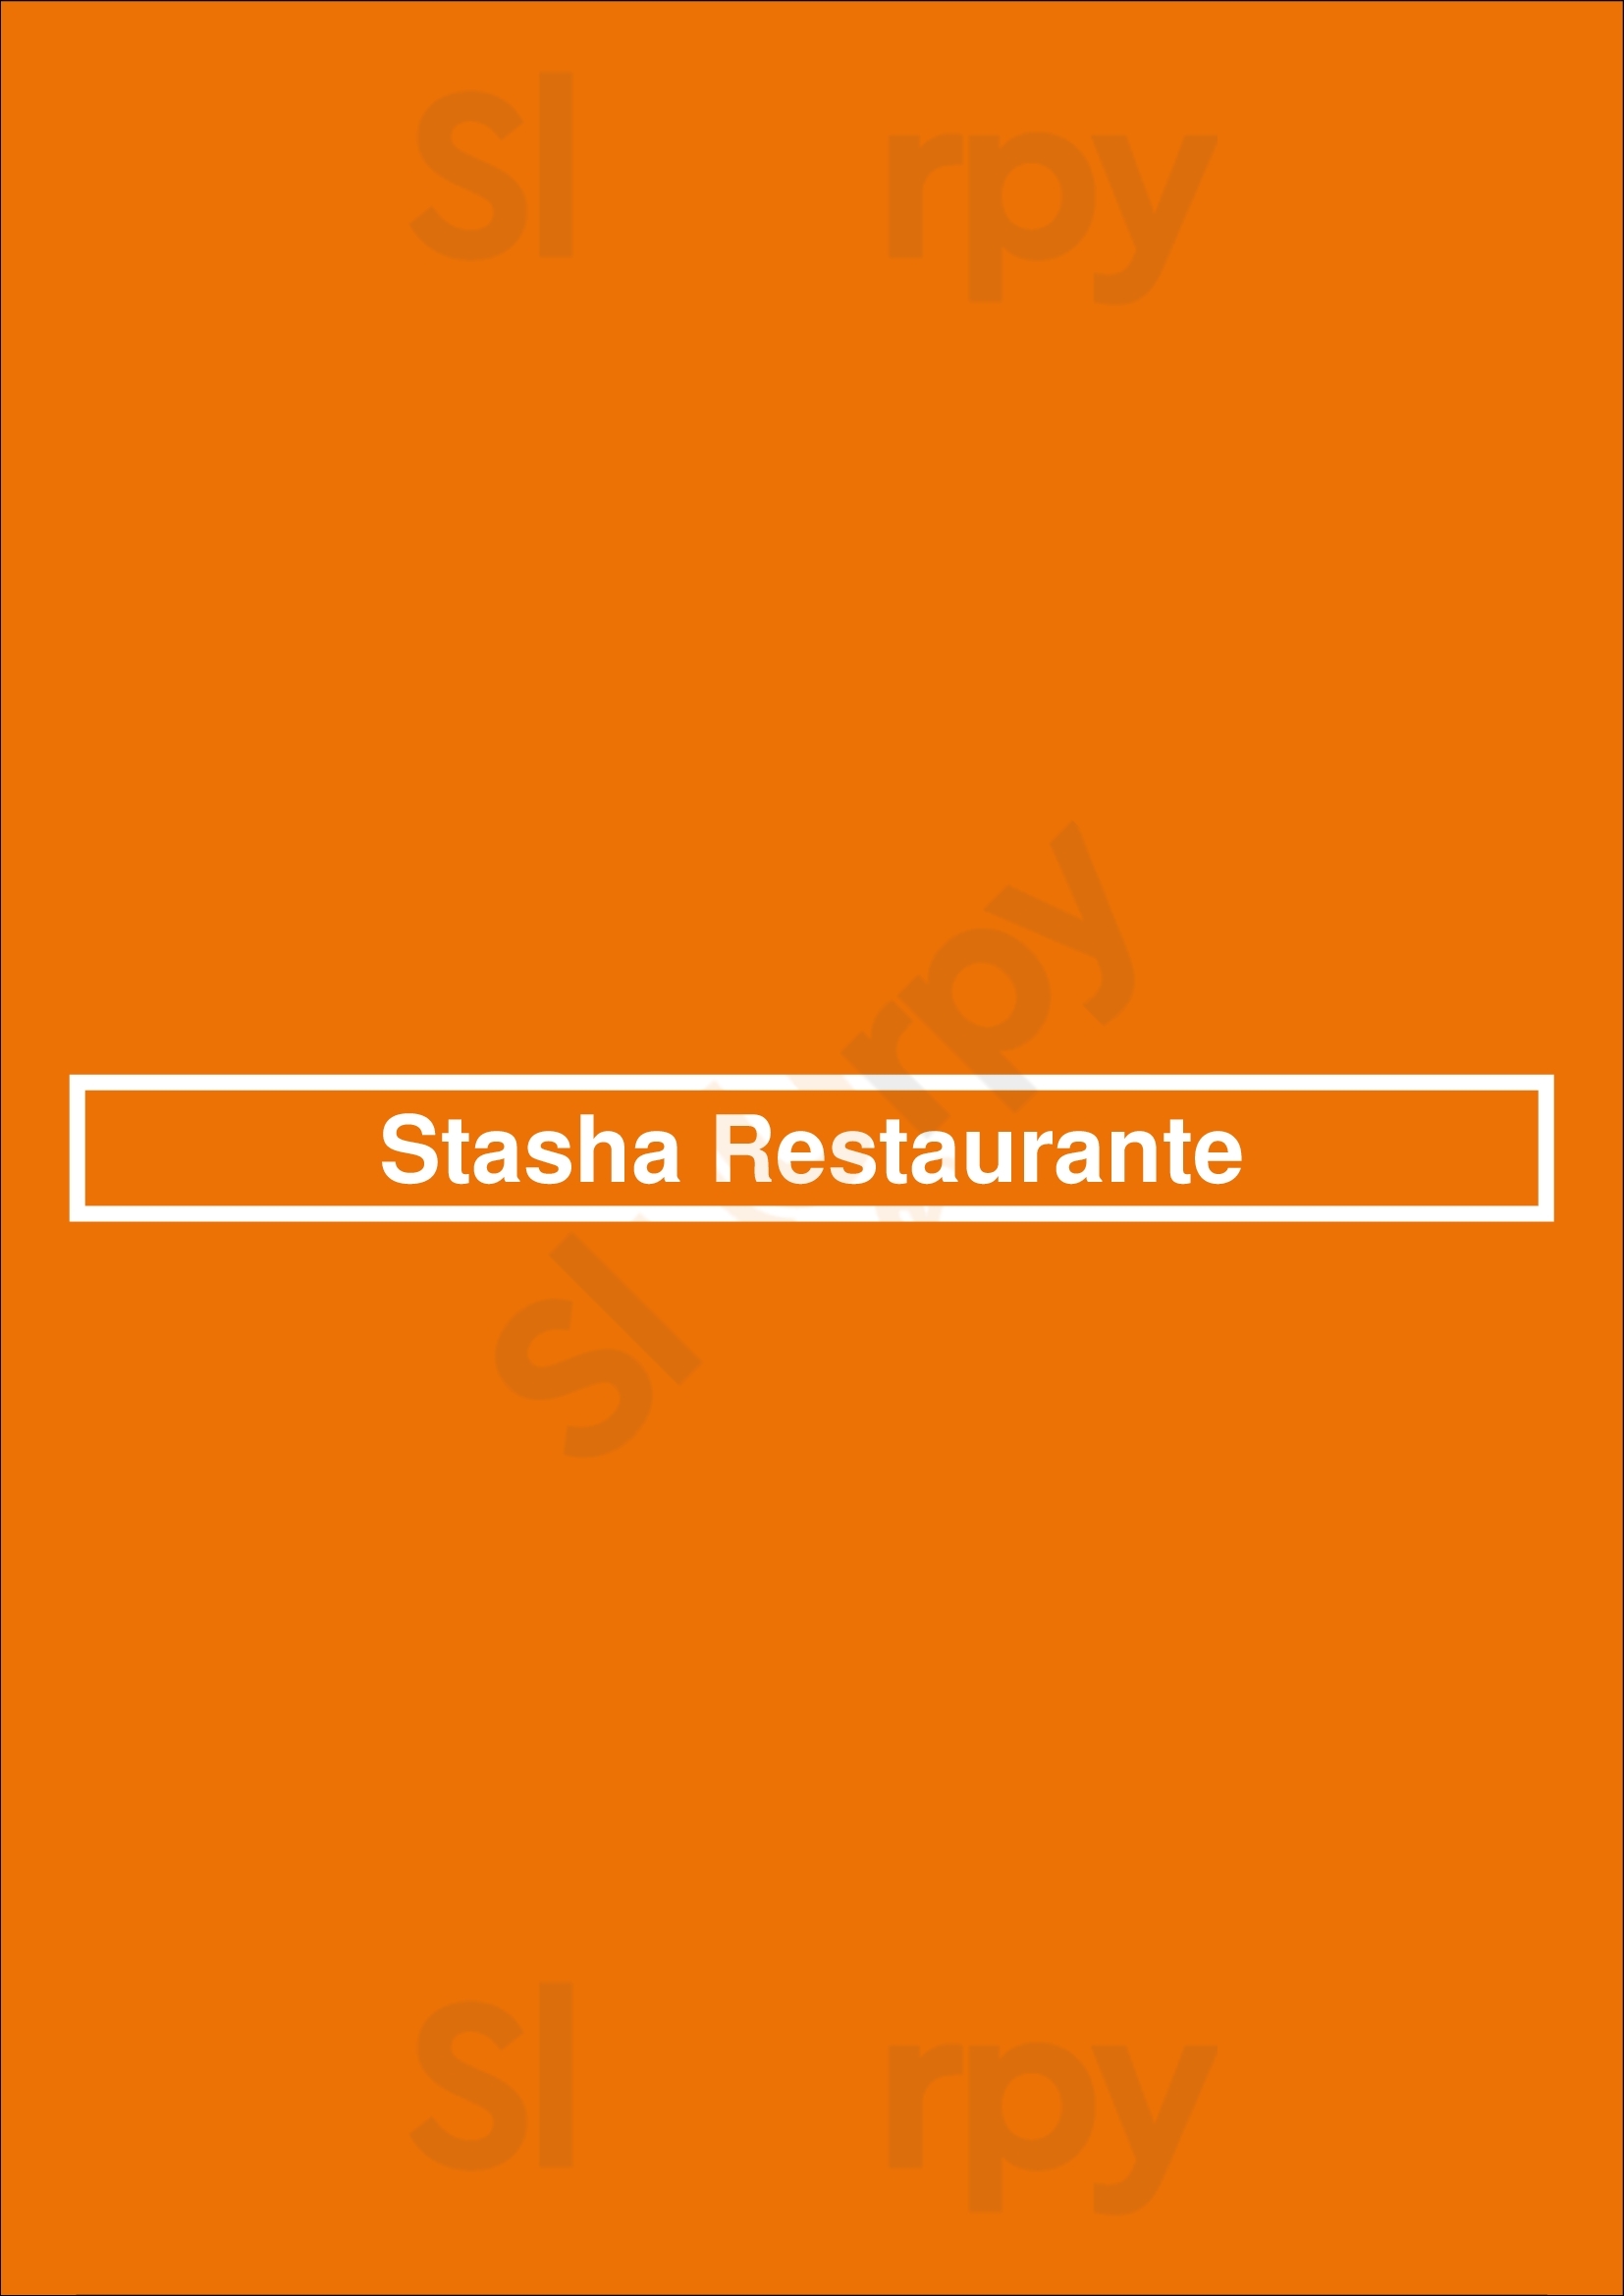 Stasha Restaurante Lisboa Menu - 1